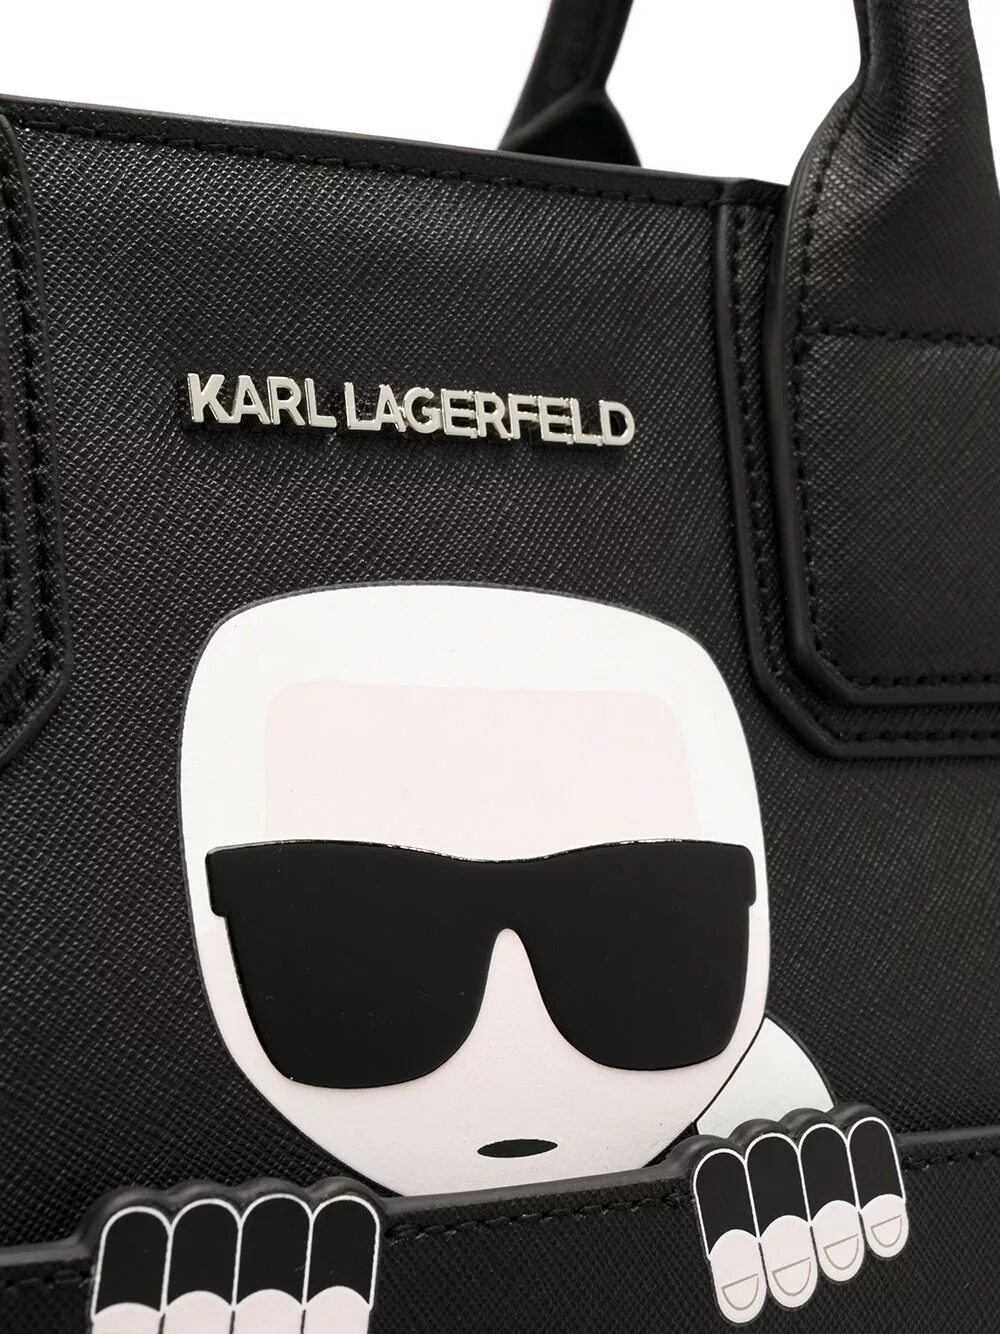 Купить сумку лагерфельд оригинал. Сумка Karl Lagerfeld ikonik черная. Karl Lagerfeld k/ikonik сумка.